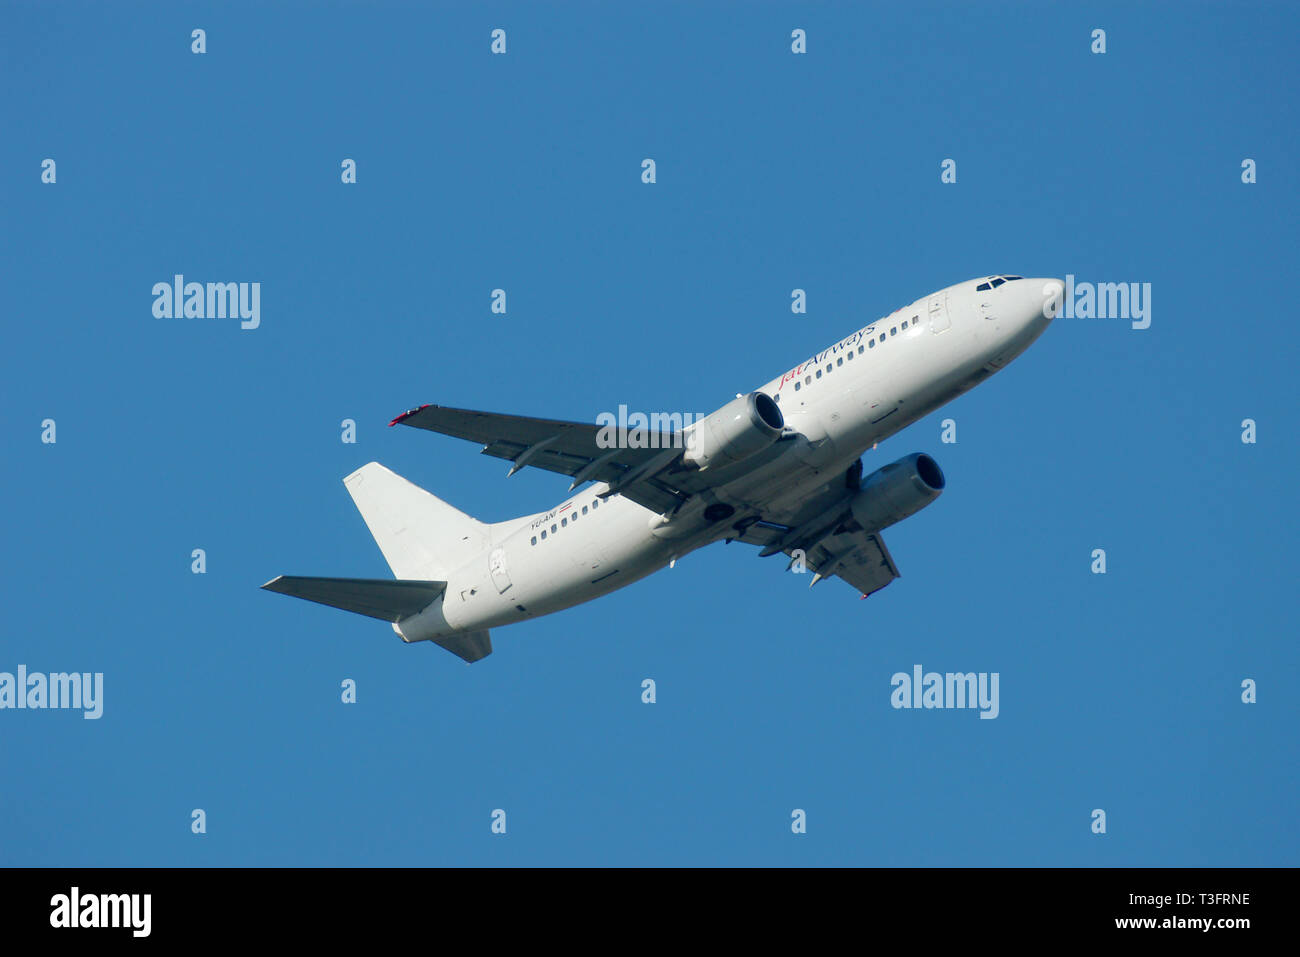 JAT Airways Boeing 737 jet airliner plane YU-ANI taking off from London Heathrow Airport, London, UK in blue sky. Plain white scheme Stock Photo